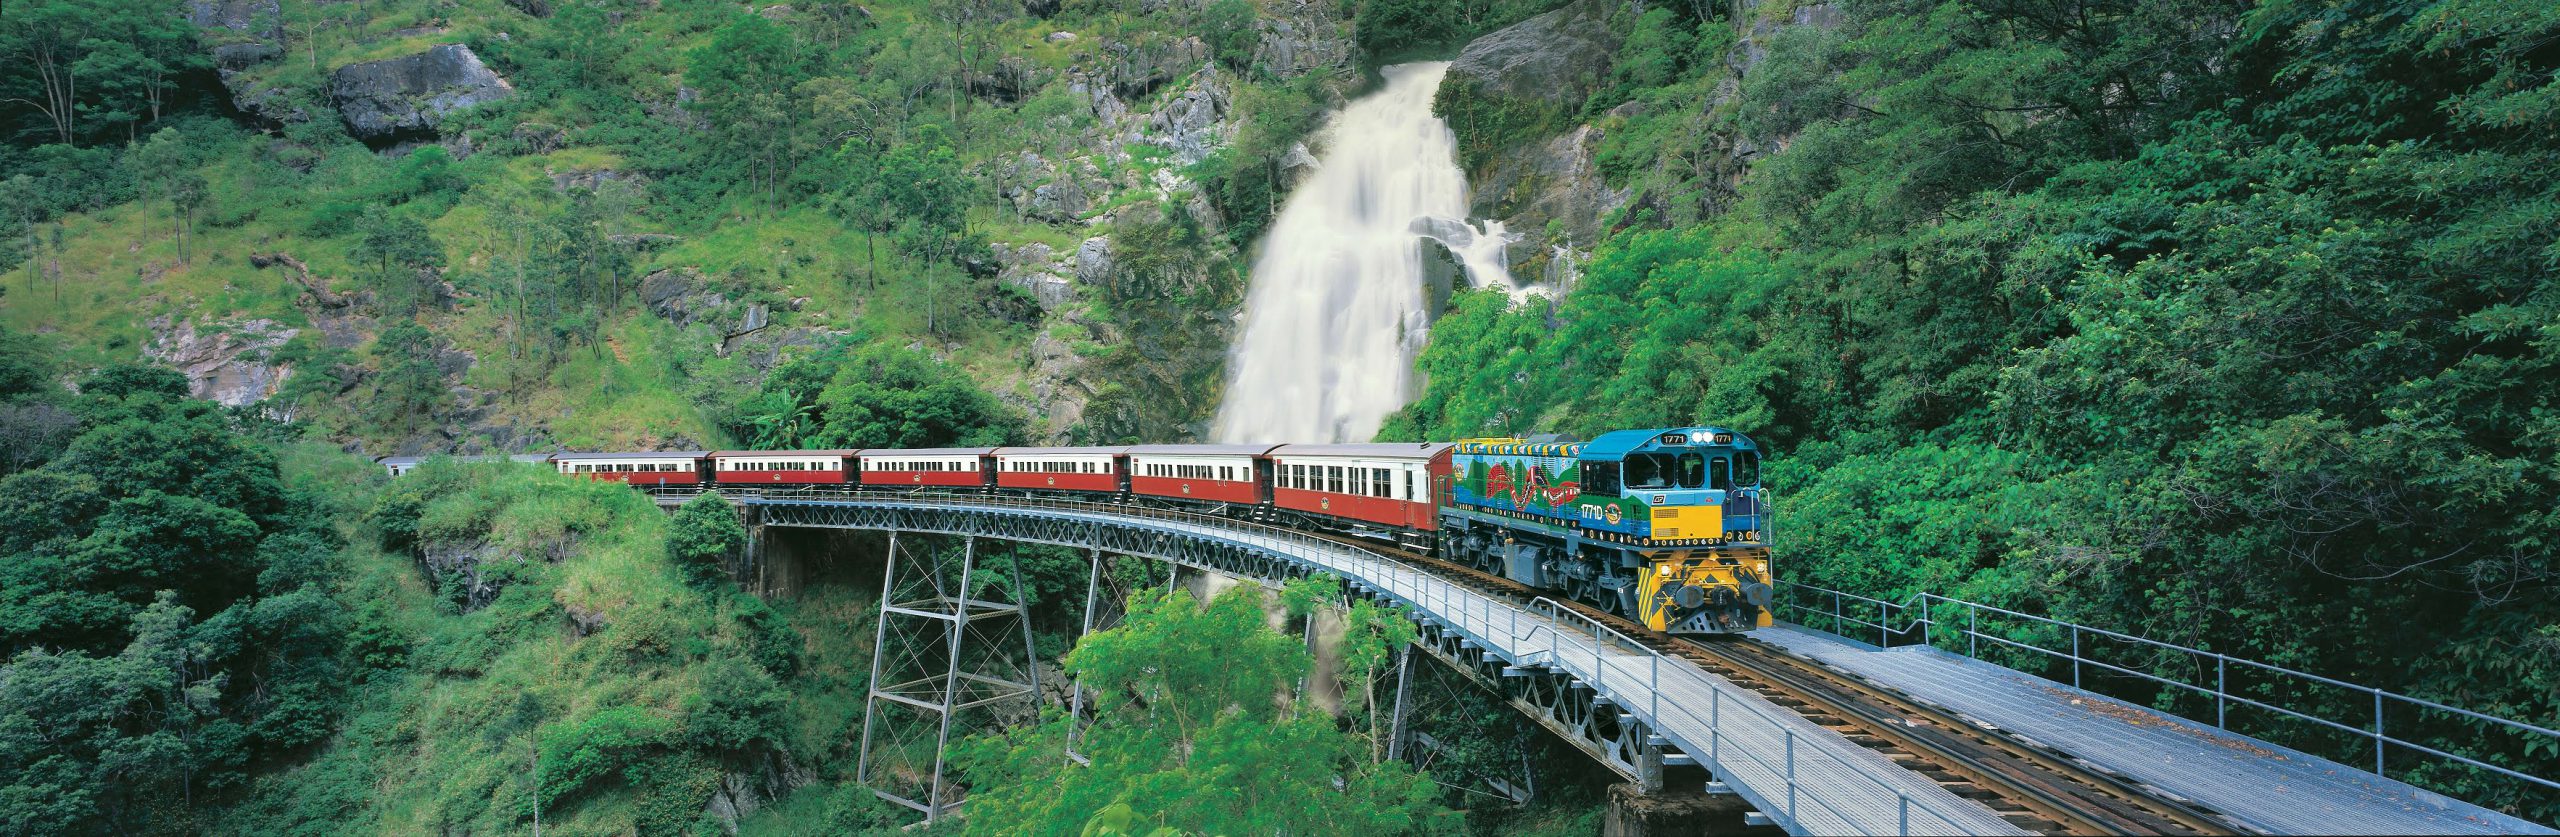 Kuranda Scenic Railway crossing over Stoney Creek bridge with waterfall in the background